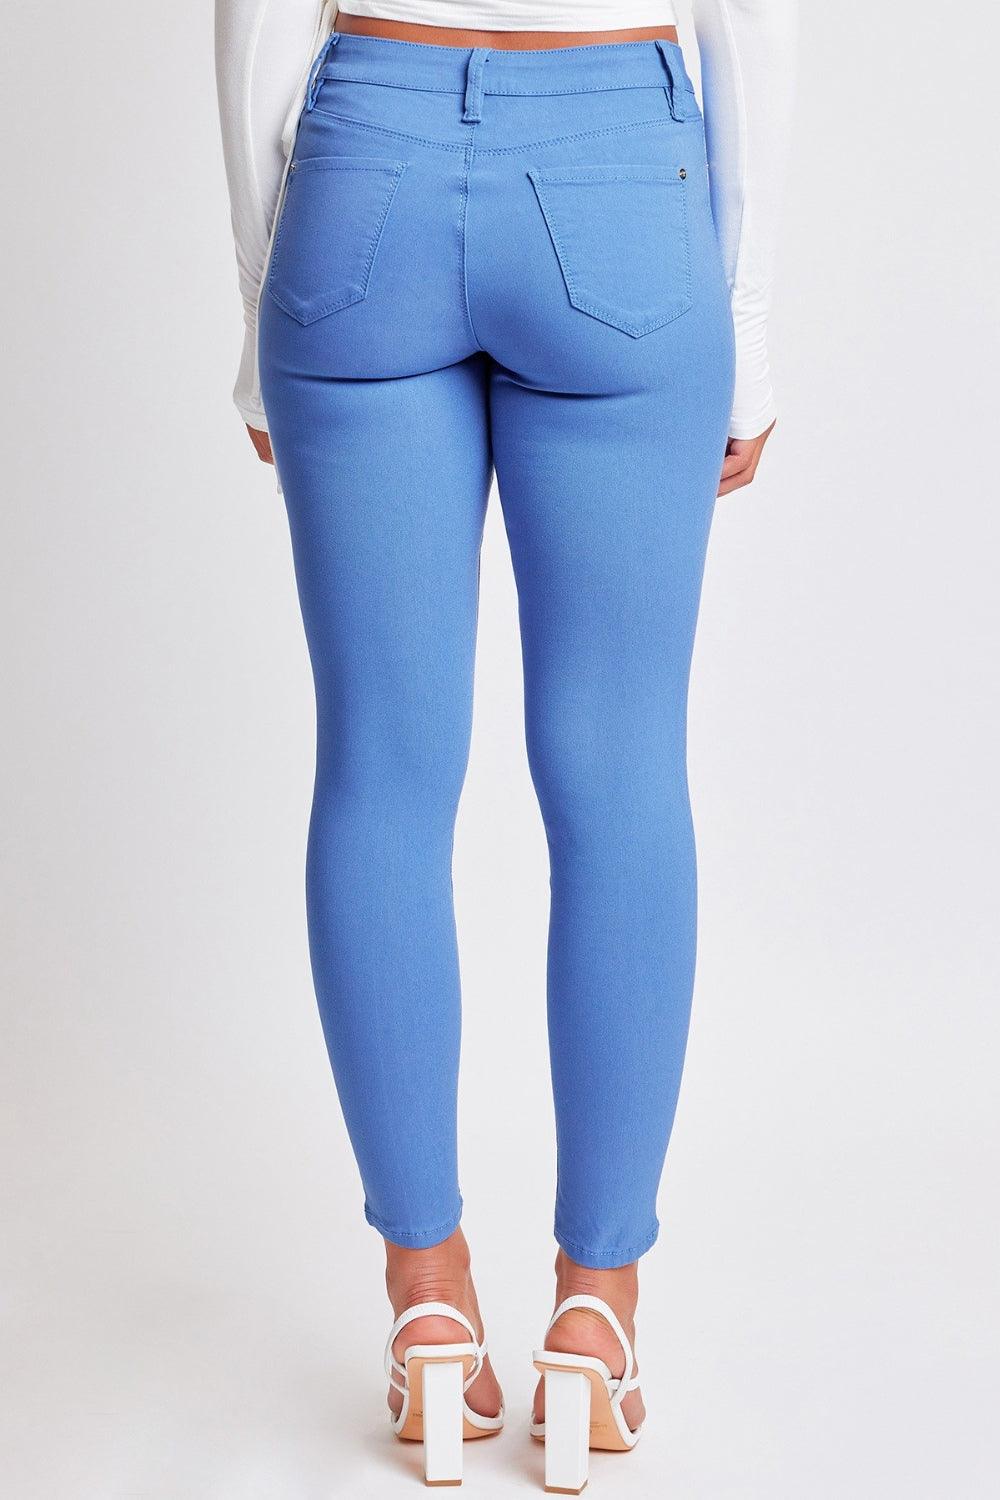 YMI Jeanswear Hyper Stretch Mid-Rise Skinny Pants - Jessiz Boutique